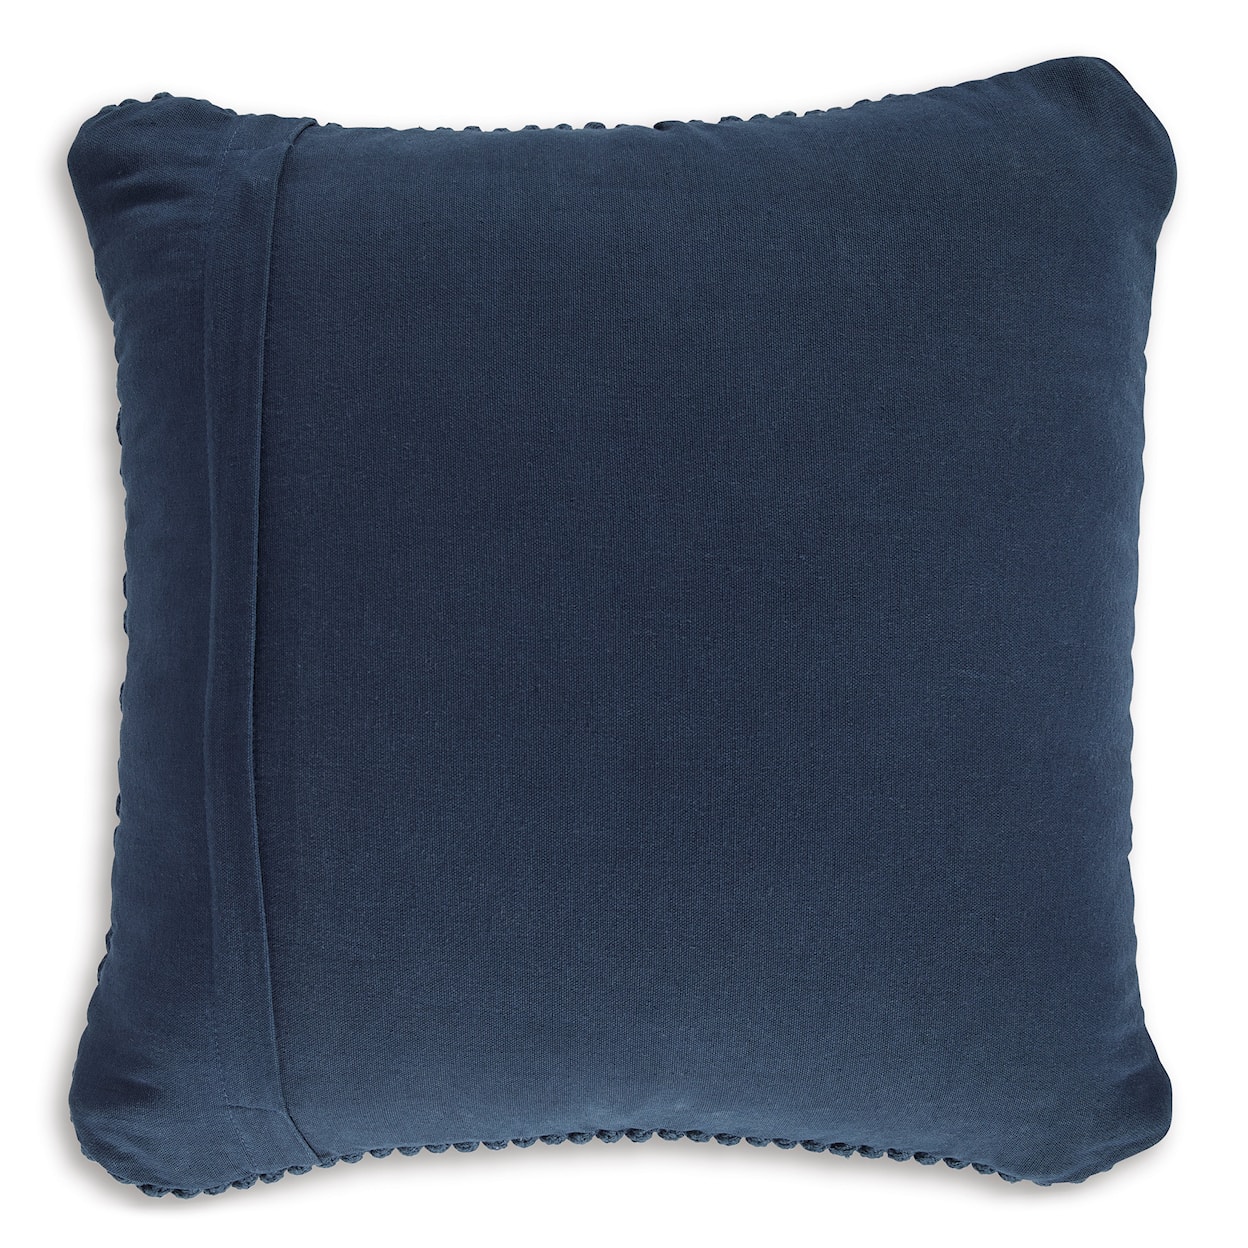 Ashley Furniture Signature Design Renemore Renemore Blue Pillow